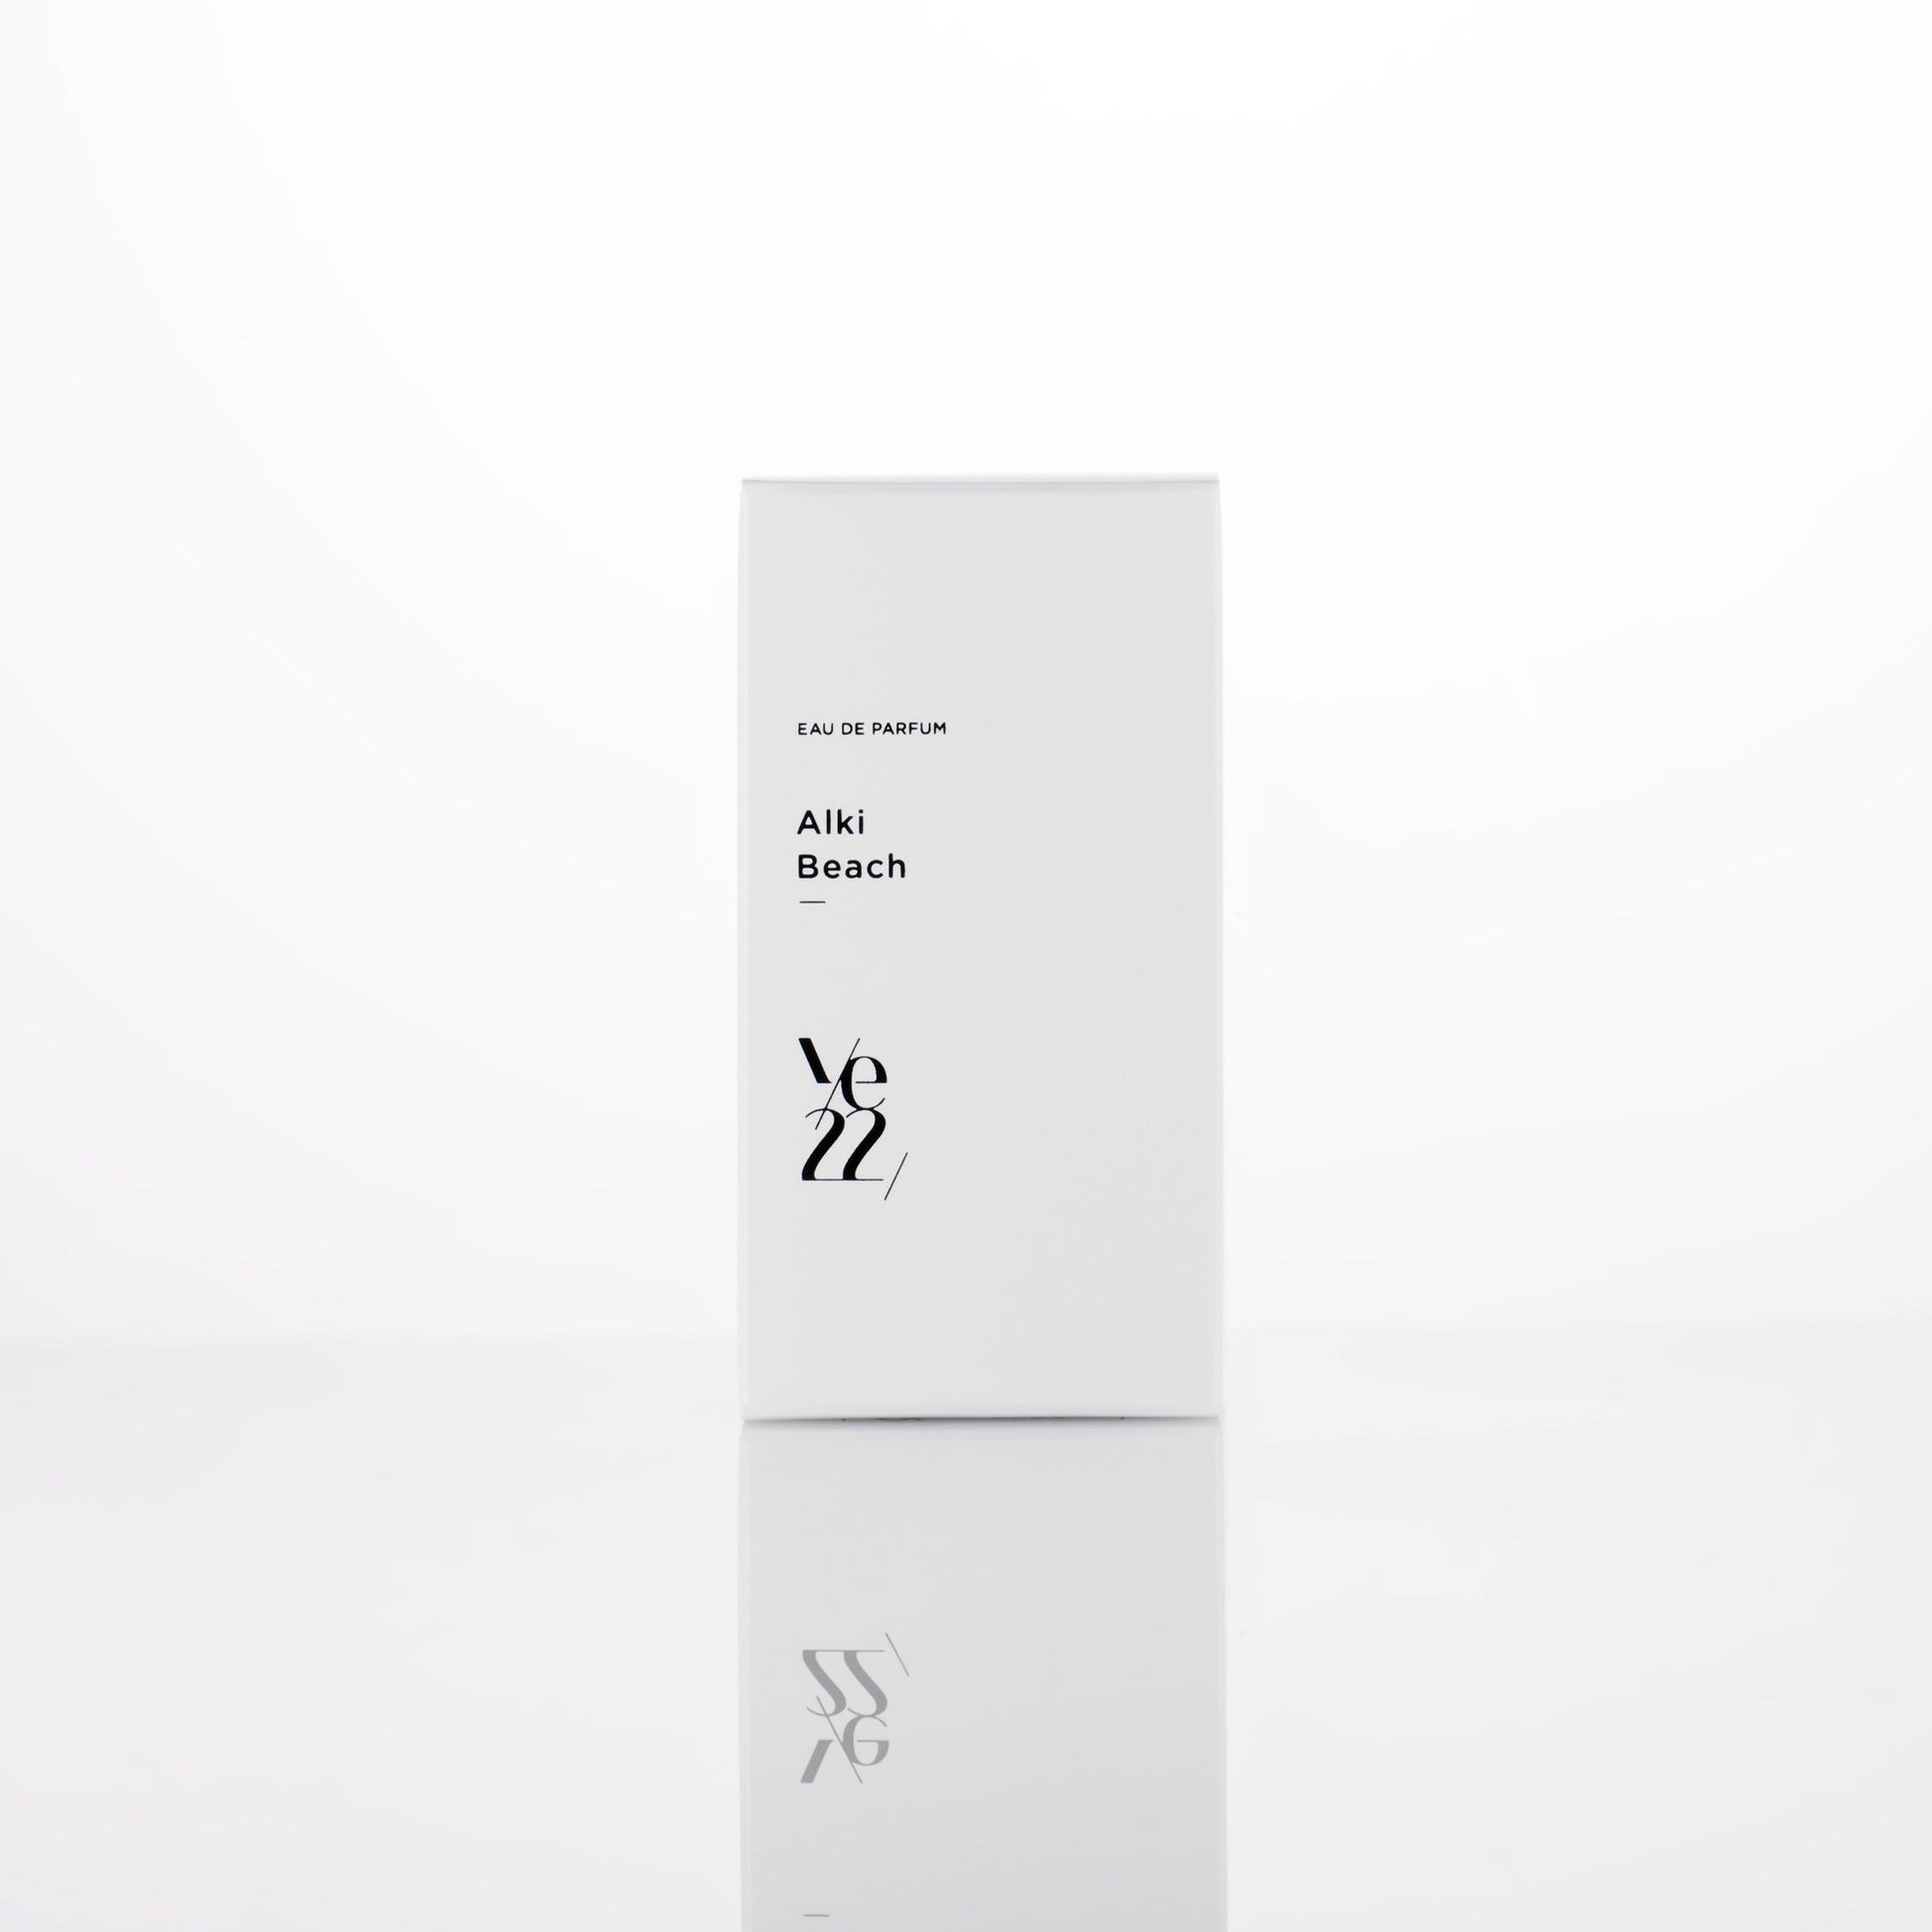 ye22-eaudeparfum-alkibeach-box